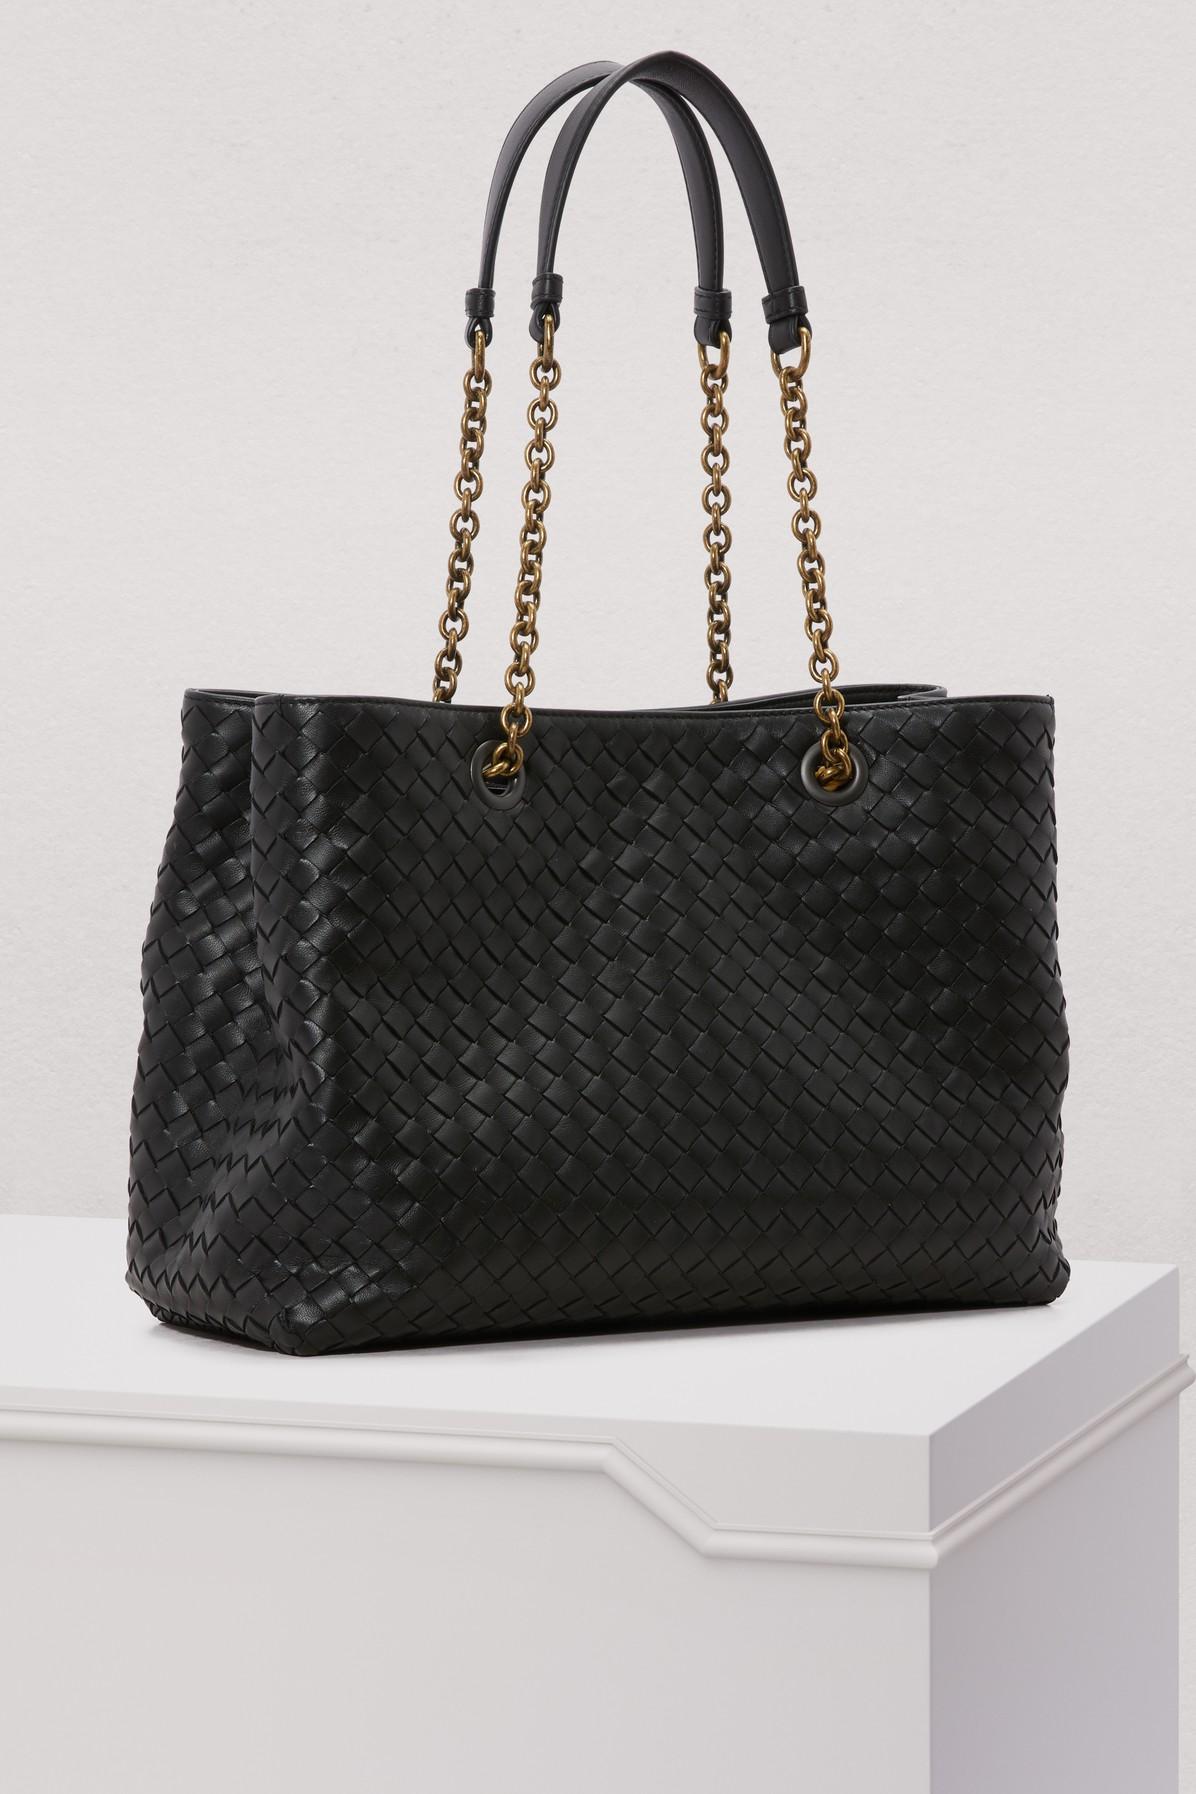 Bottega Veneta Tote Bag With A Chain in Black | Lyst